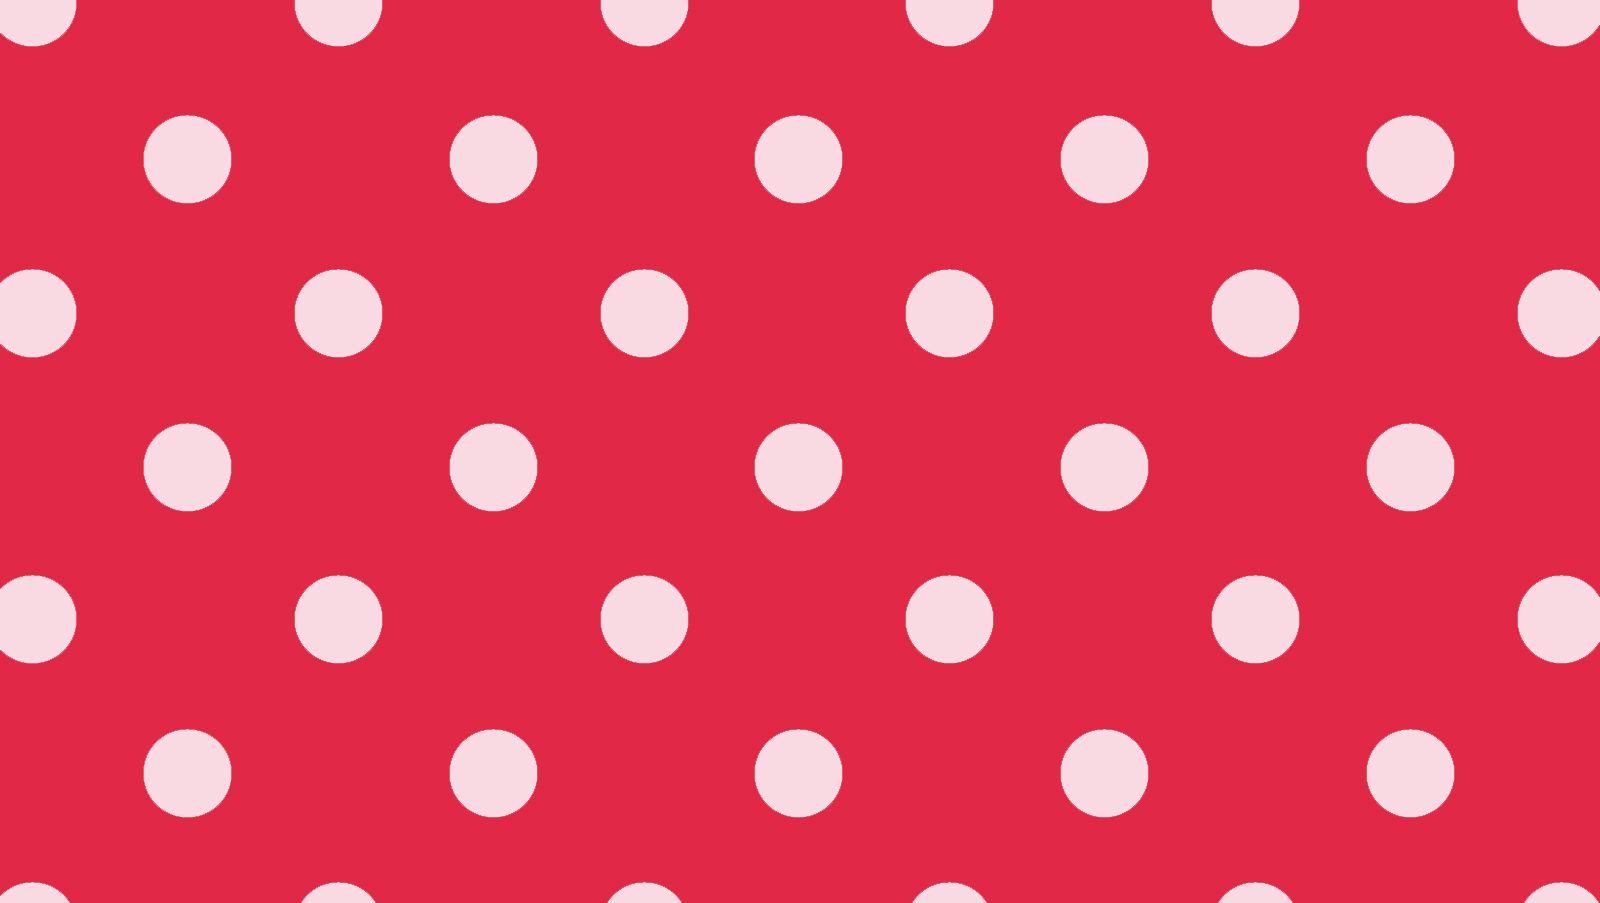 Polka dots Pattern Design Wallpaper for Kids Room  lifencolors